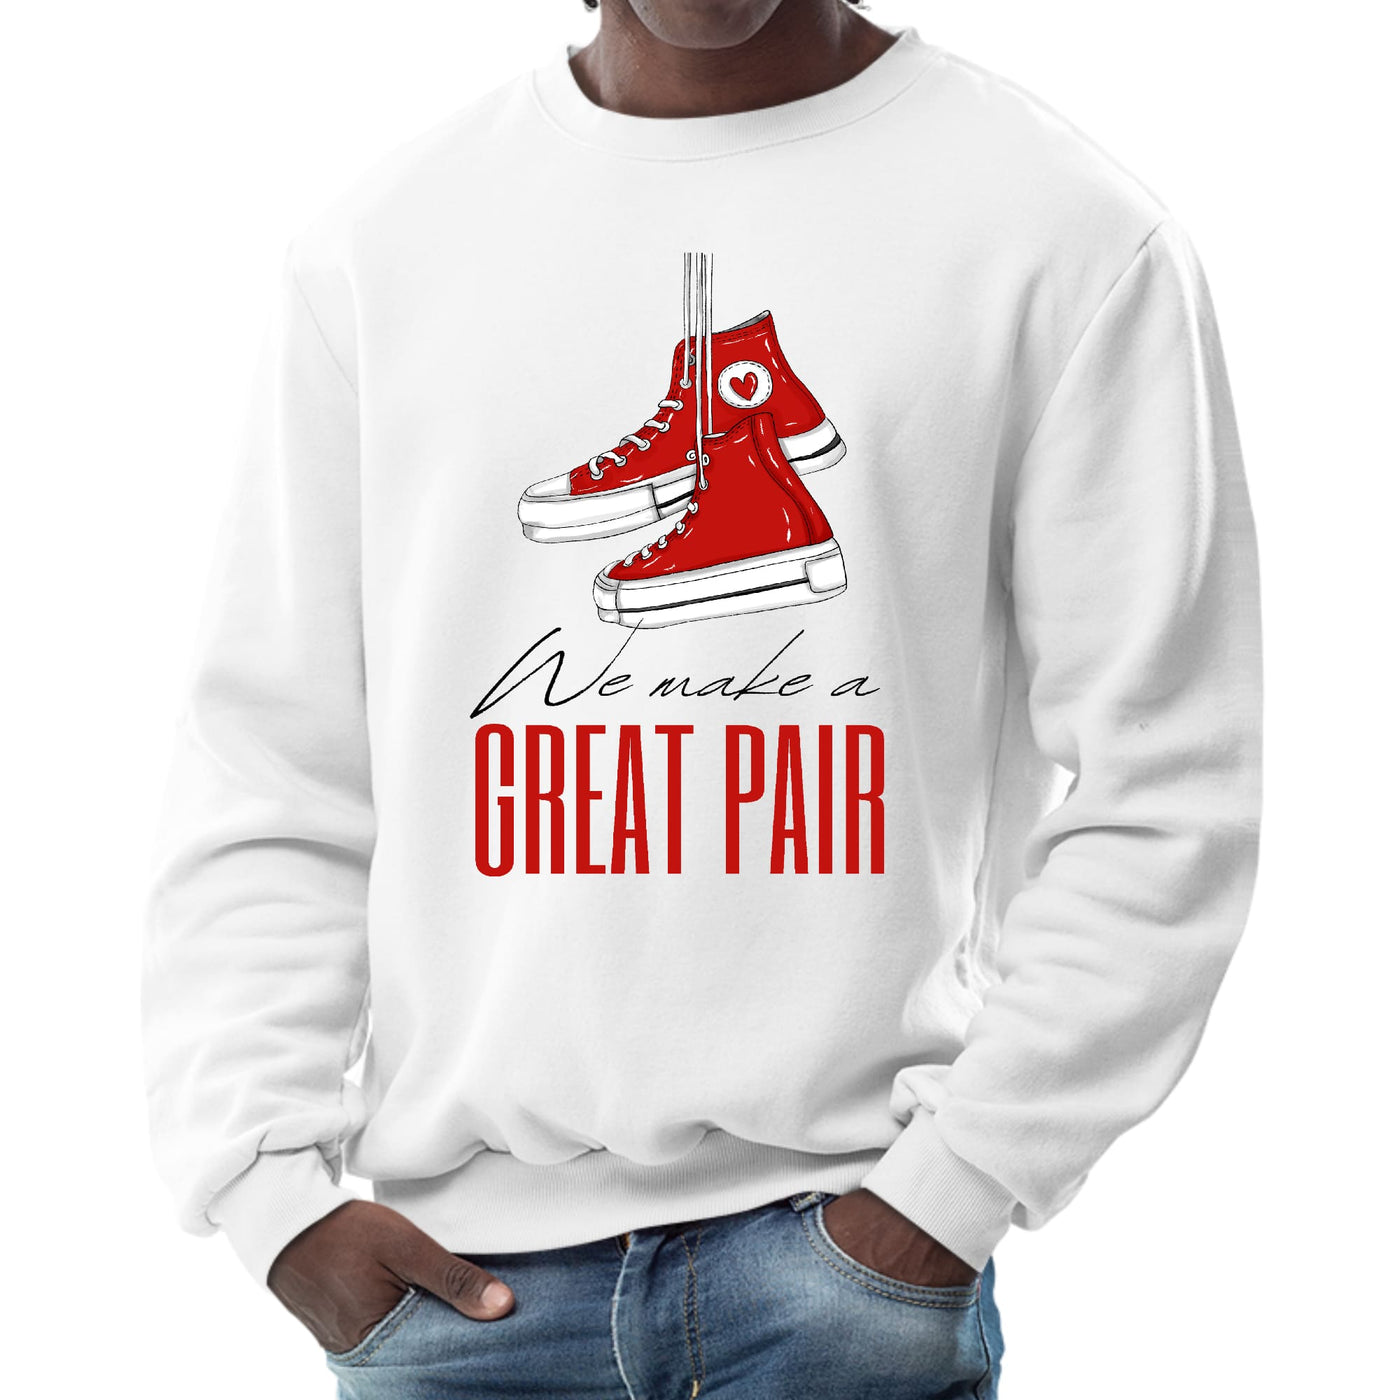 Mens Graphic Sweatshirt Say It Soul We Make a Great Pair Red - Mens